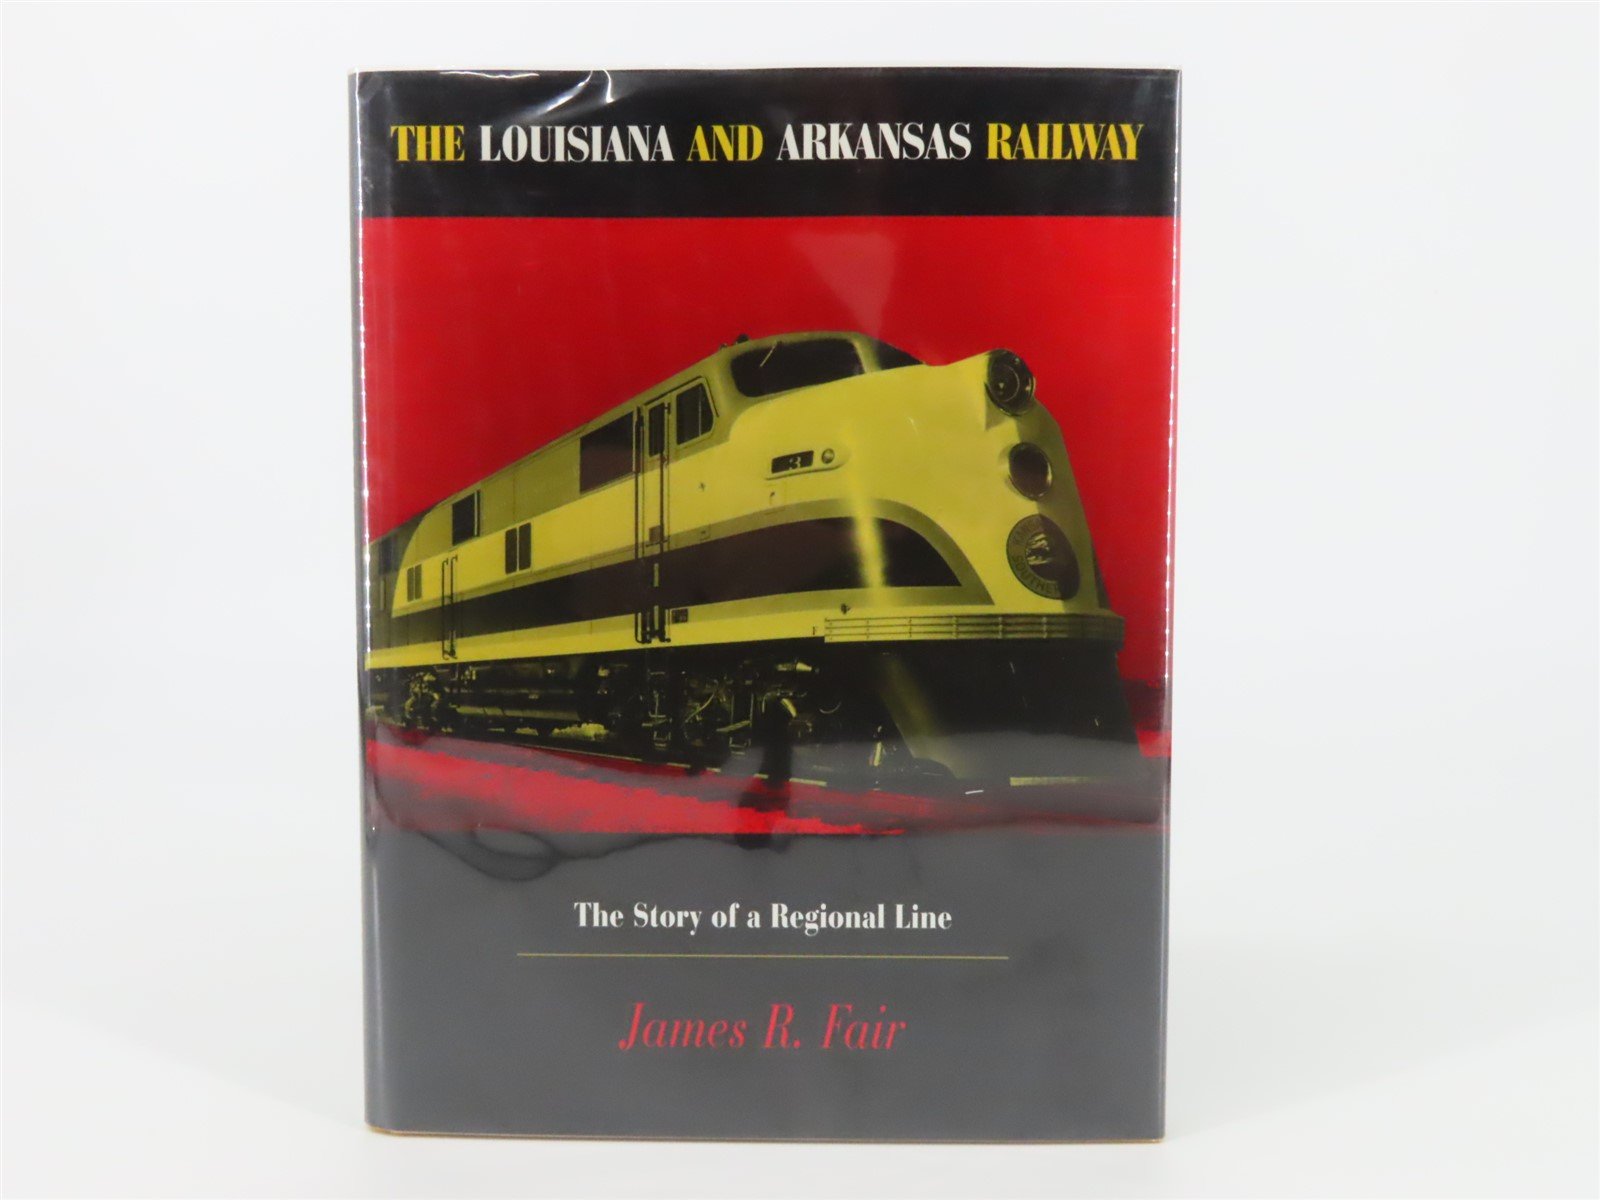 The Louisiana And Arkansas Railway - The Story of a Regional Line by Fair ©1997